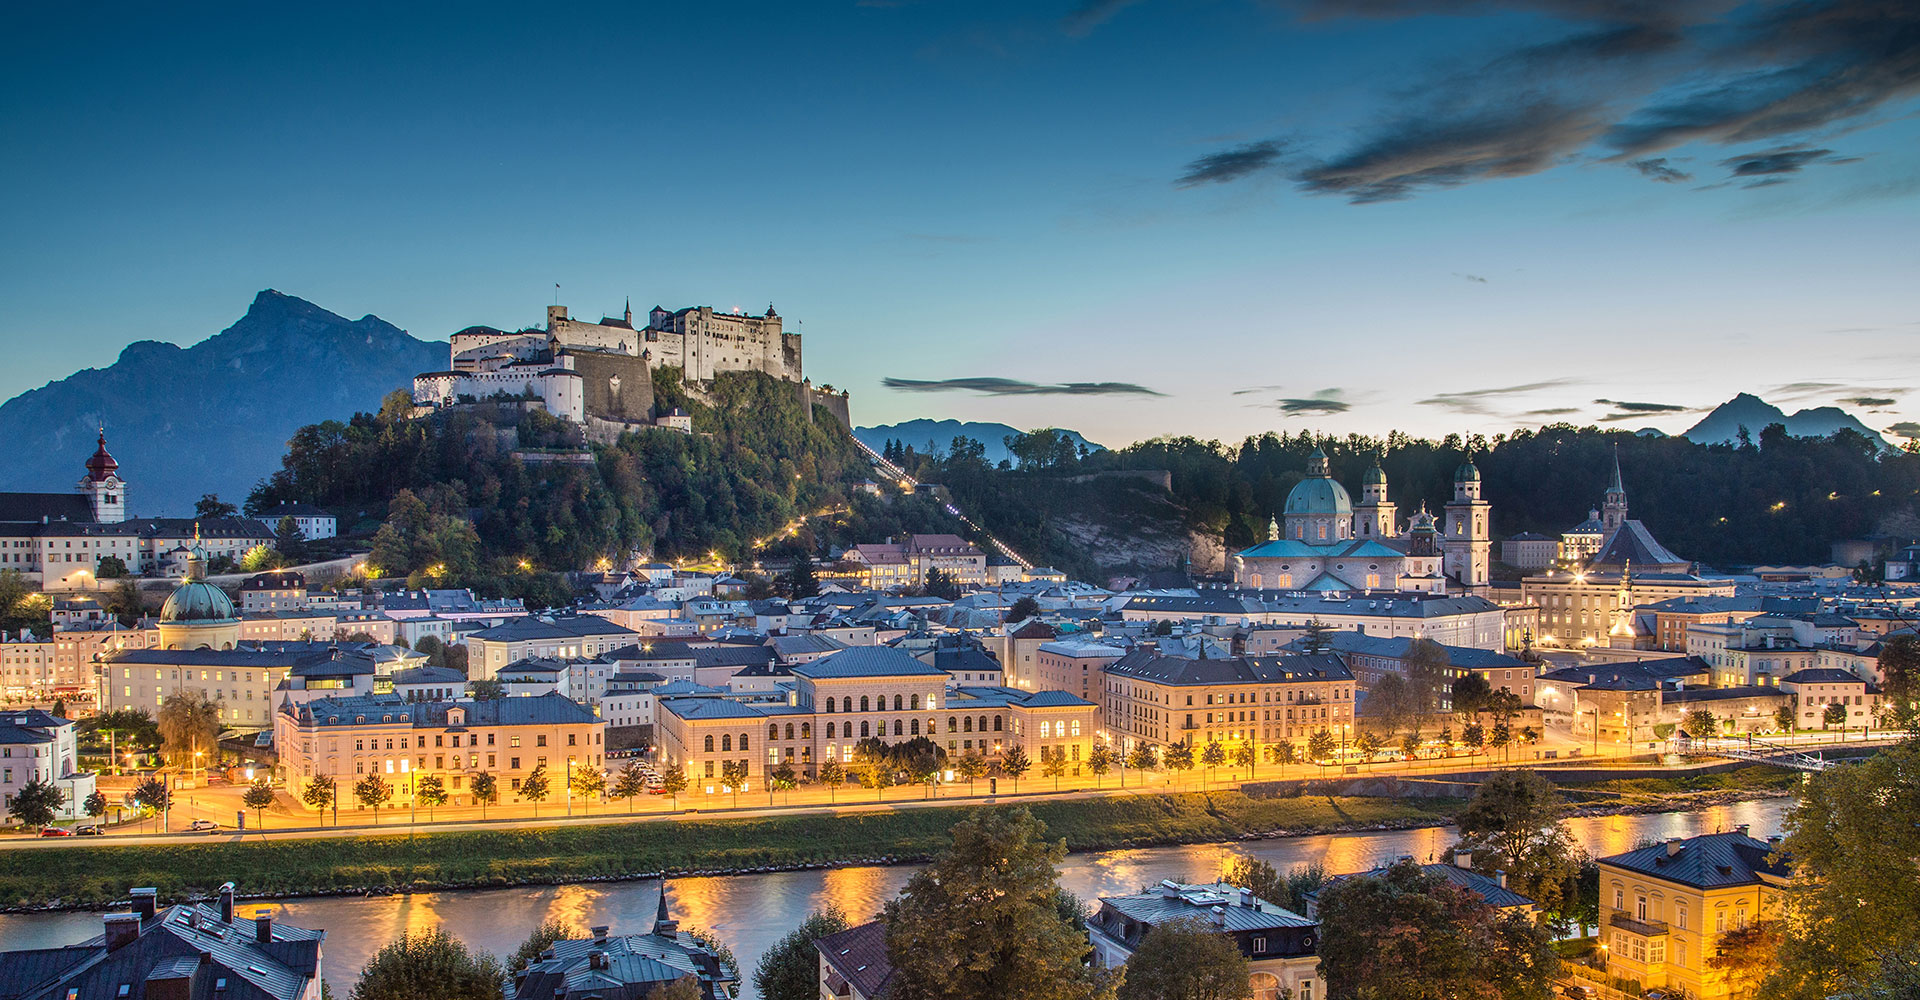 Tagesausflug in die Stadt Salzburg